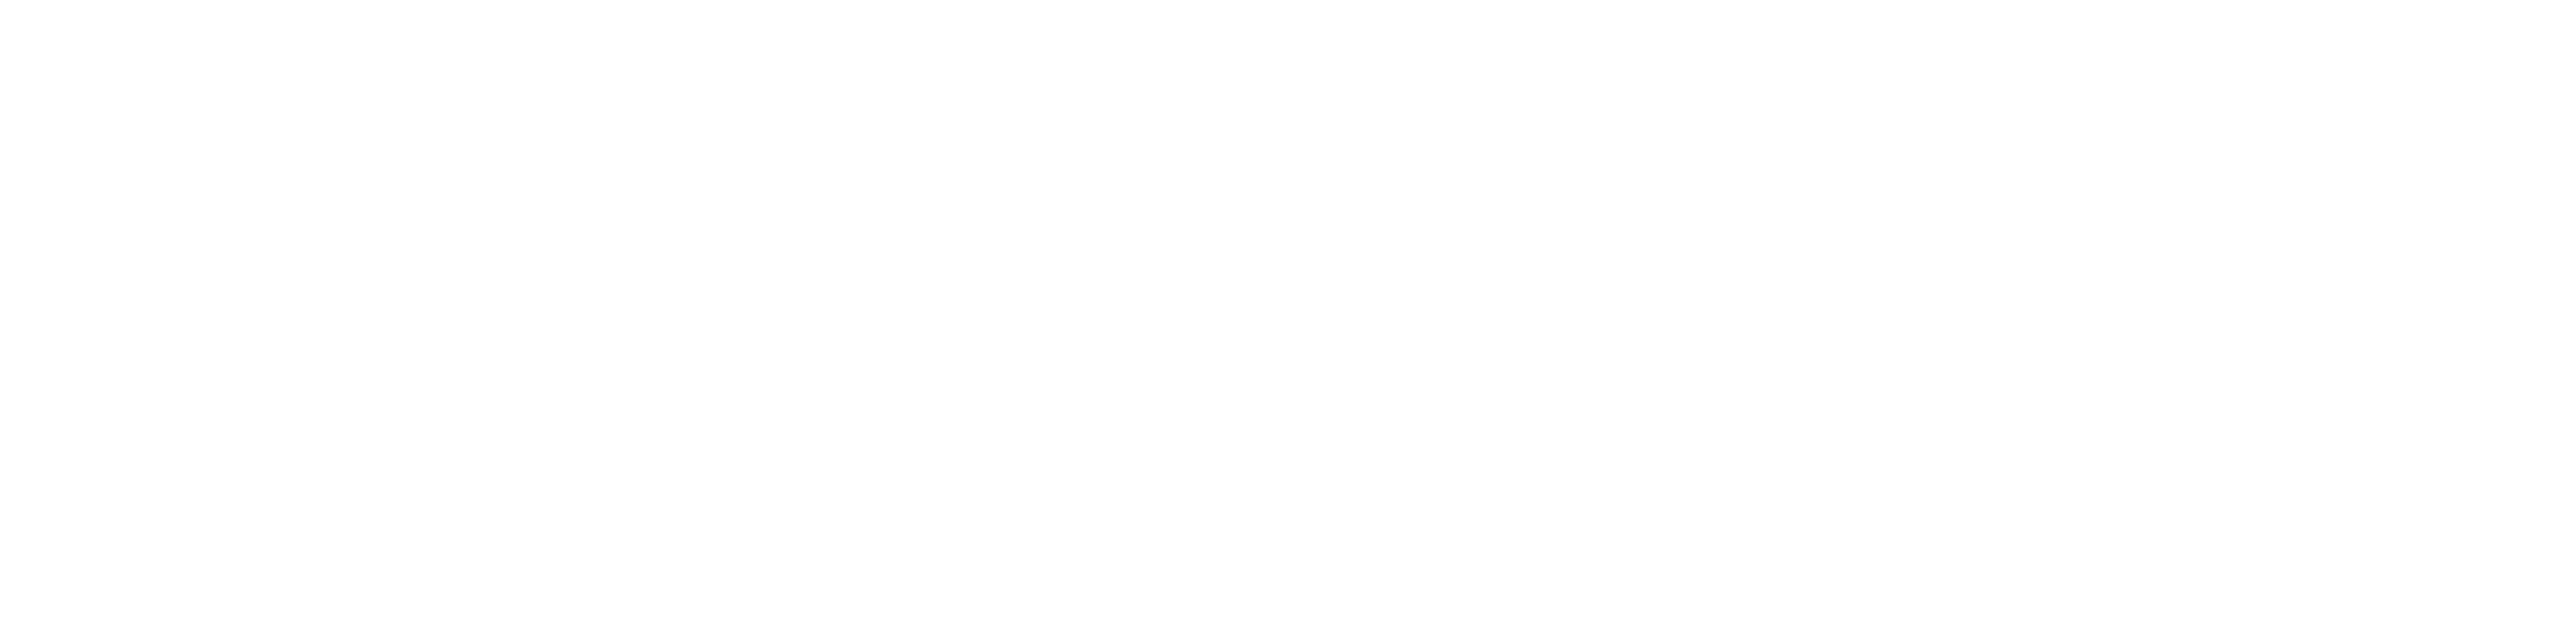 Custom design, development, professional service, and AI consulting